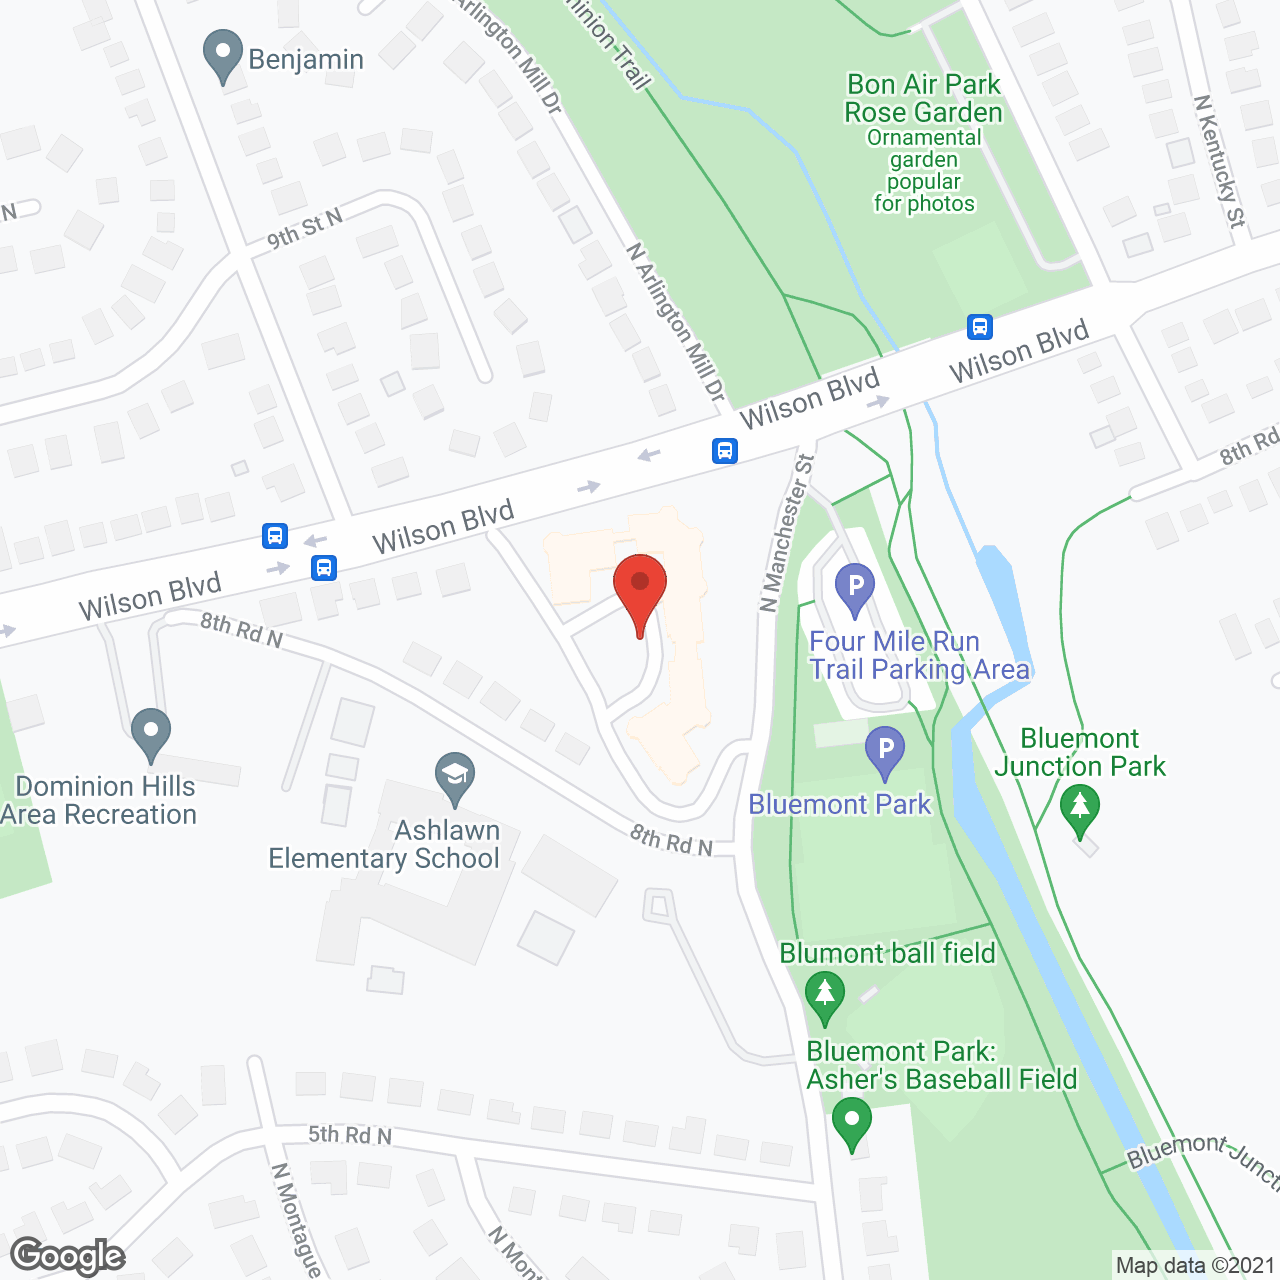 Sunrise of Bluemont Park in google map